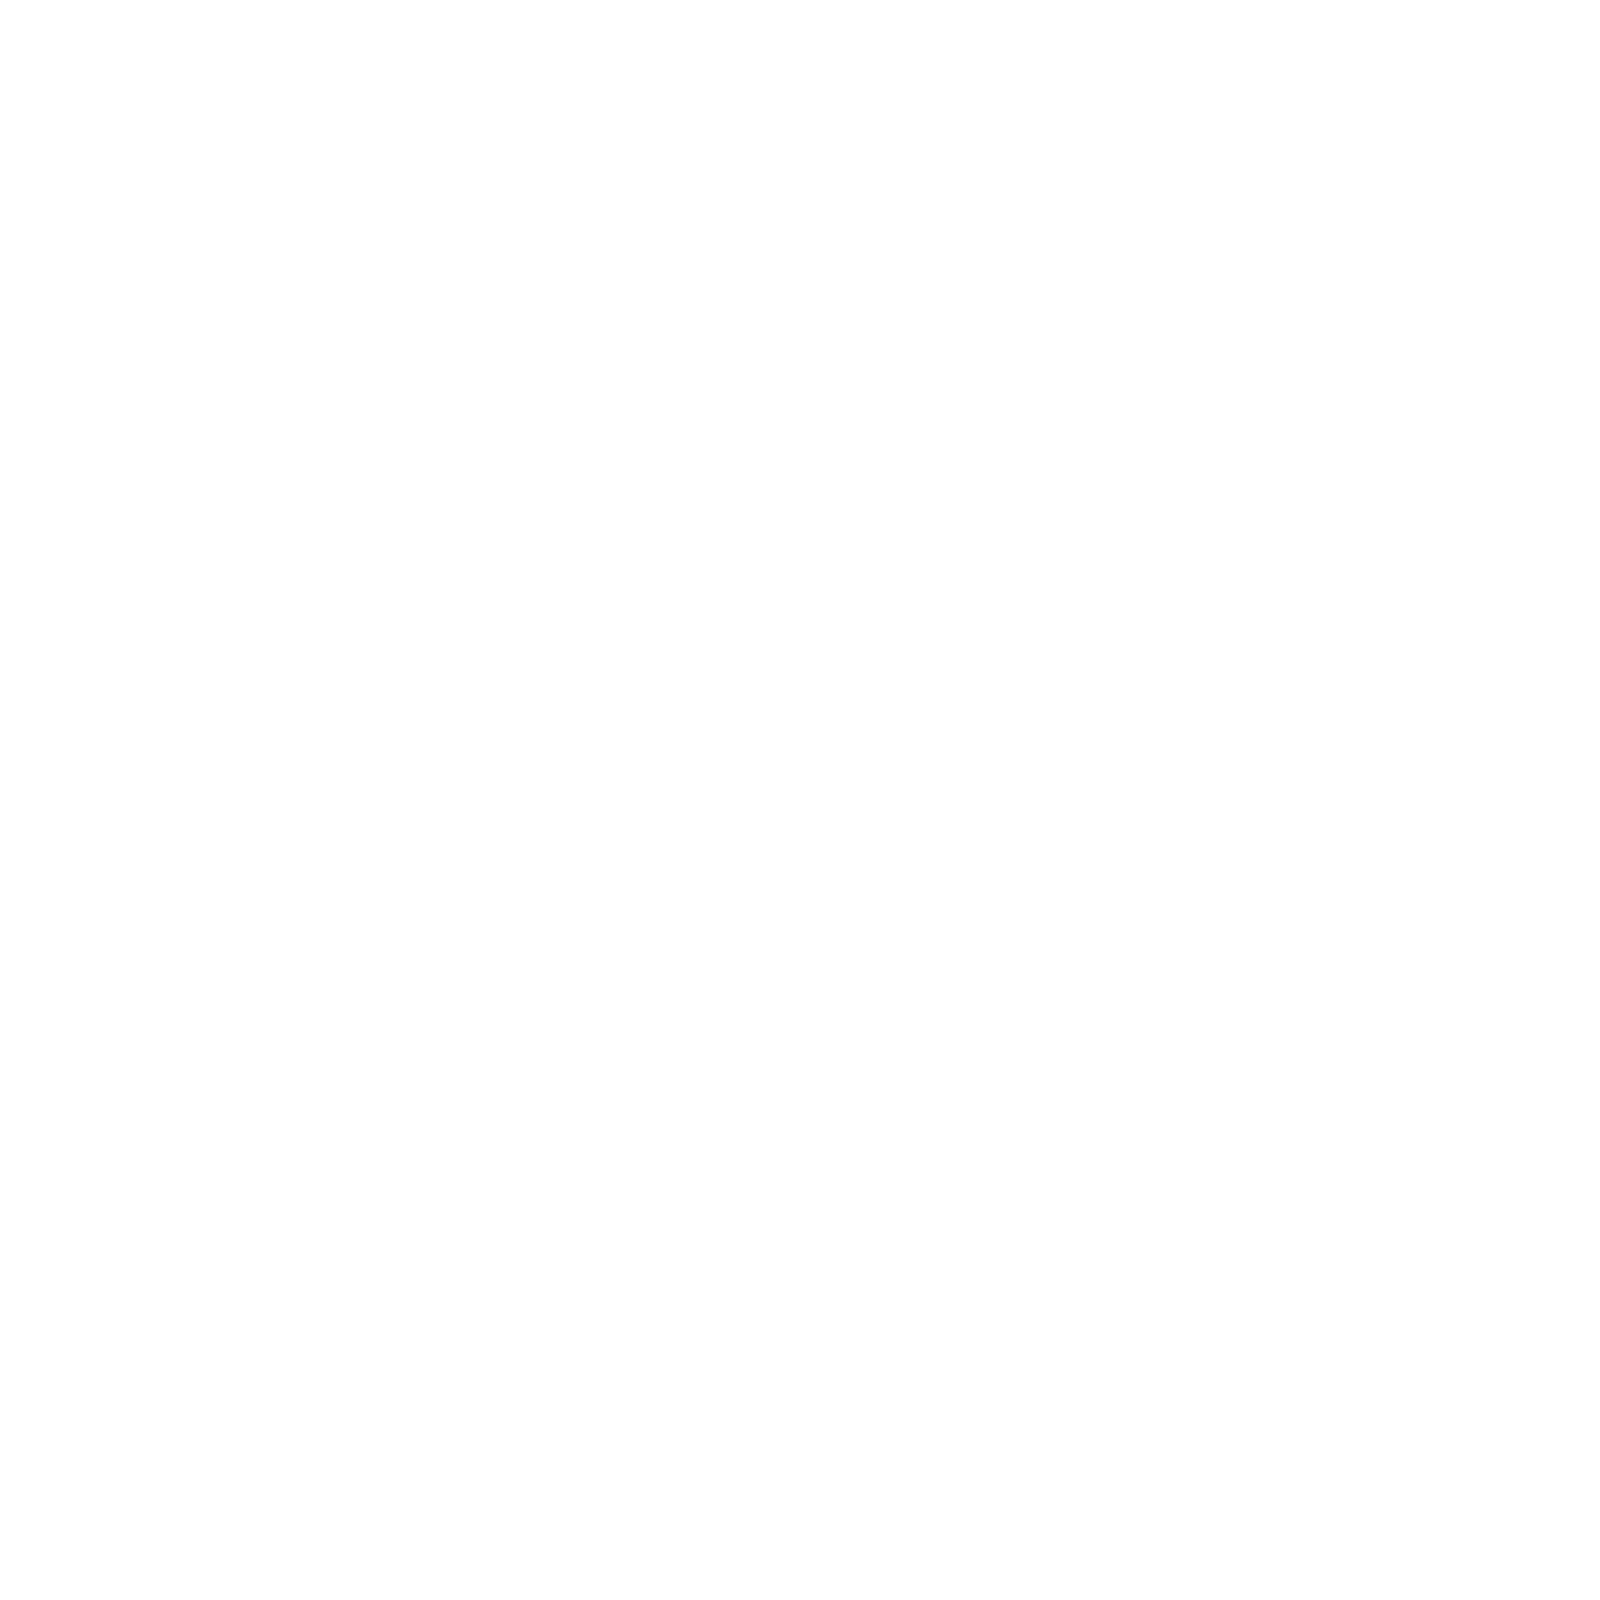 Community Memorial Health System logo on a transparent backdrop.